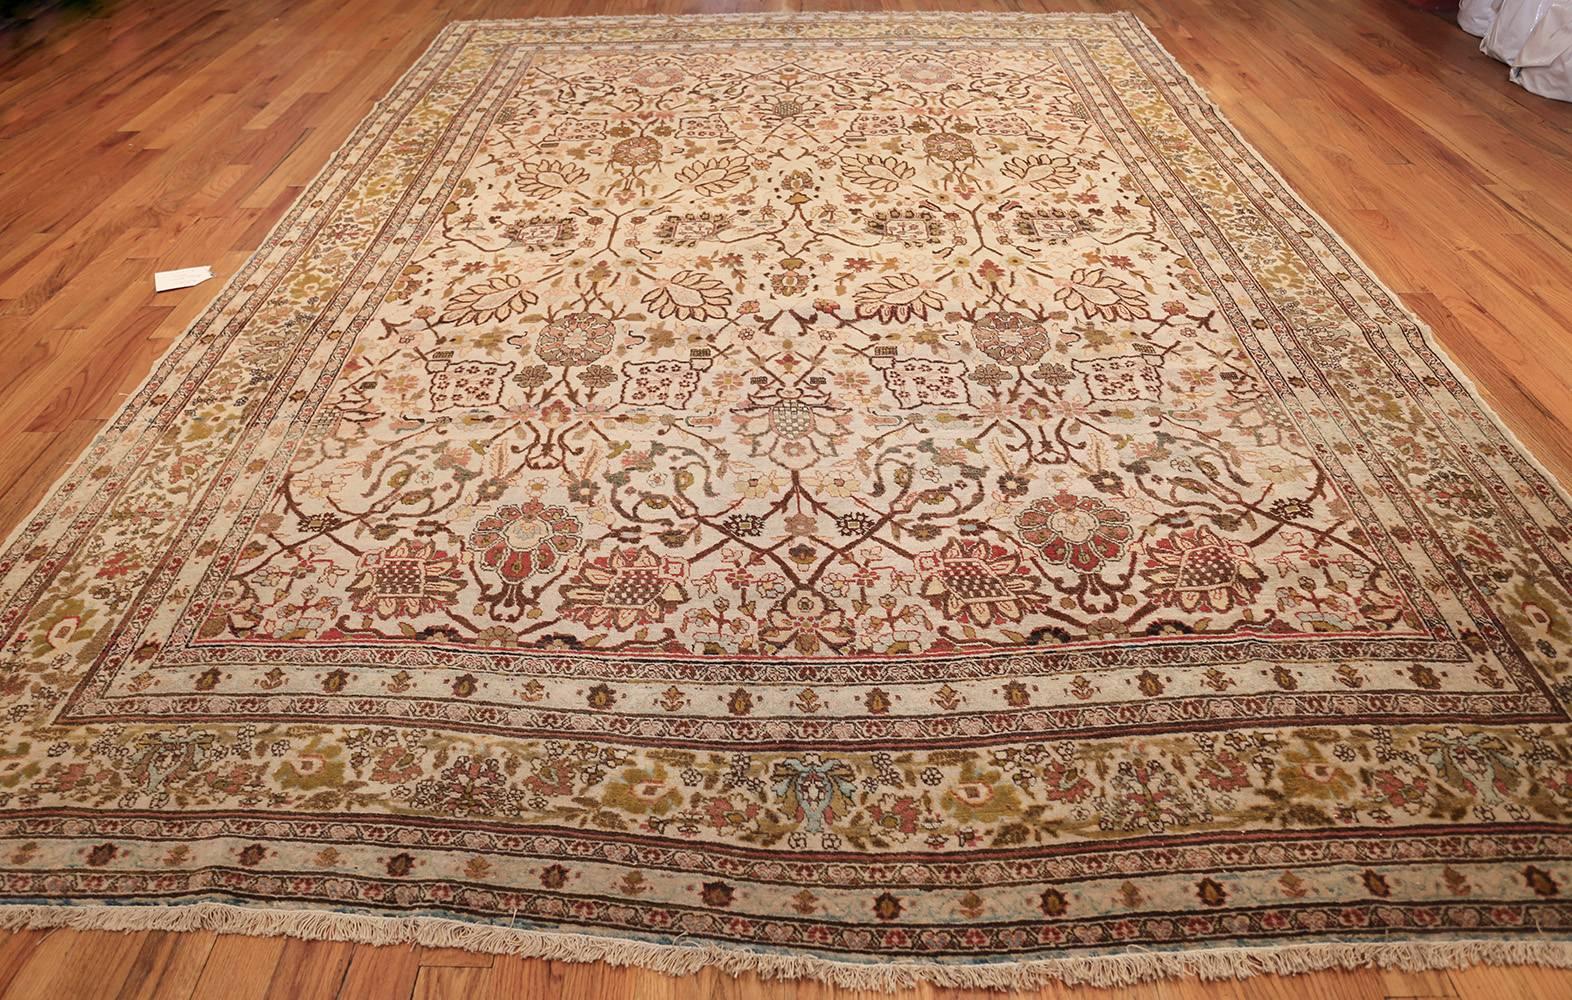 Antique Persian Tabriz Rug. Size: 9 ft x 13 ft (2.74 m x 3.96 m) 6